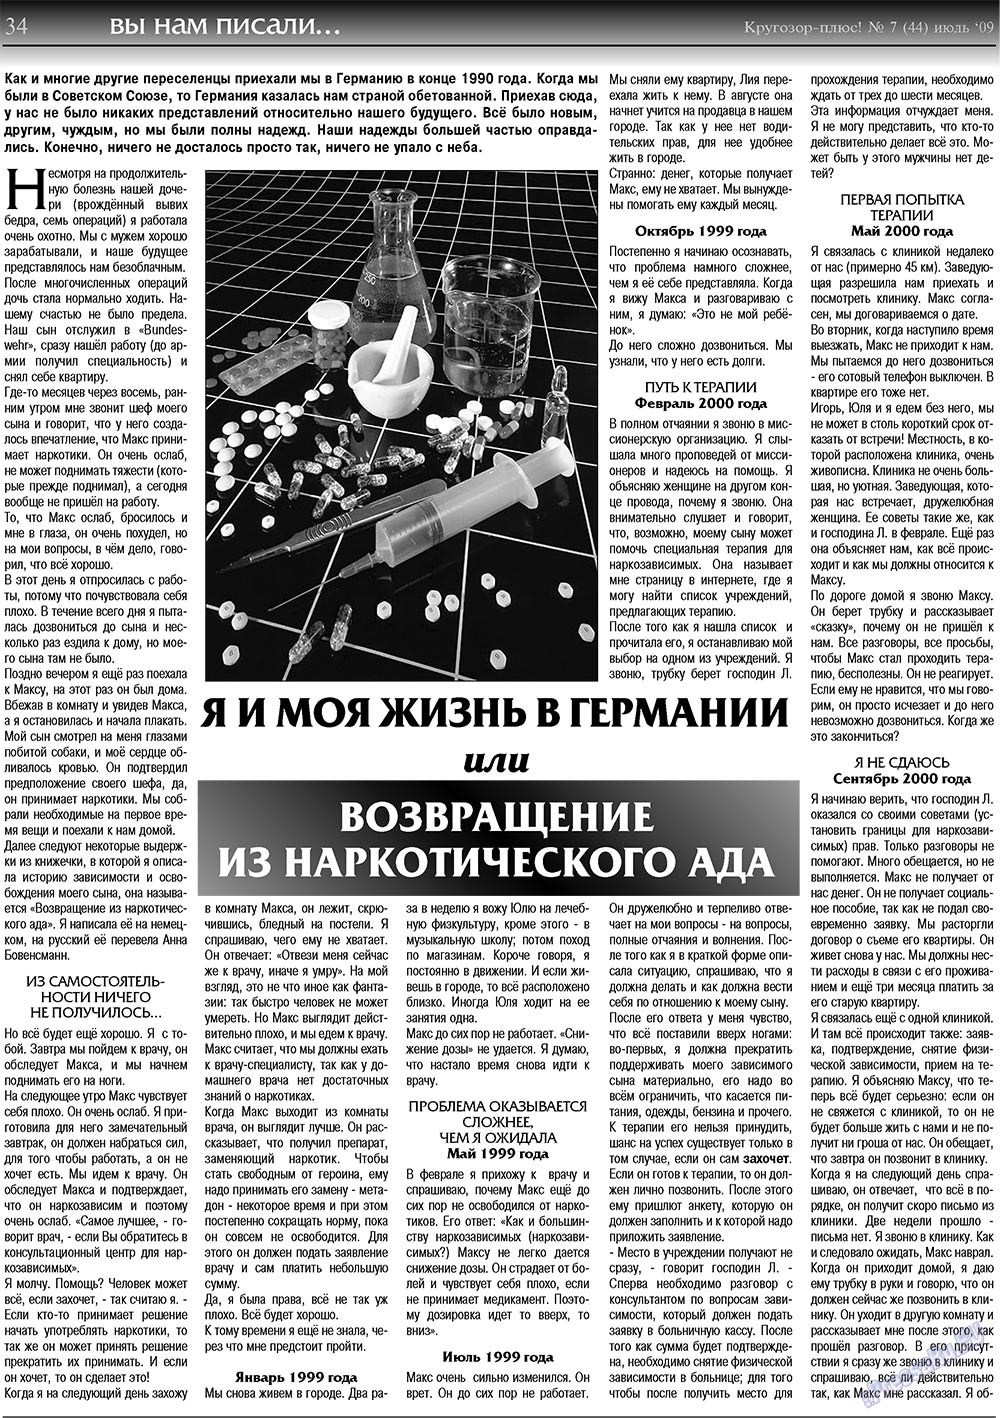 Кругозор плюс! (газета). 2009 год, номер 7, стр. 34